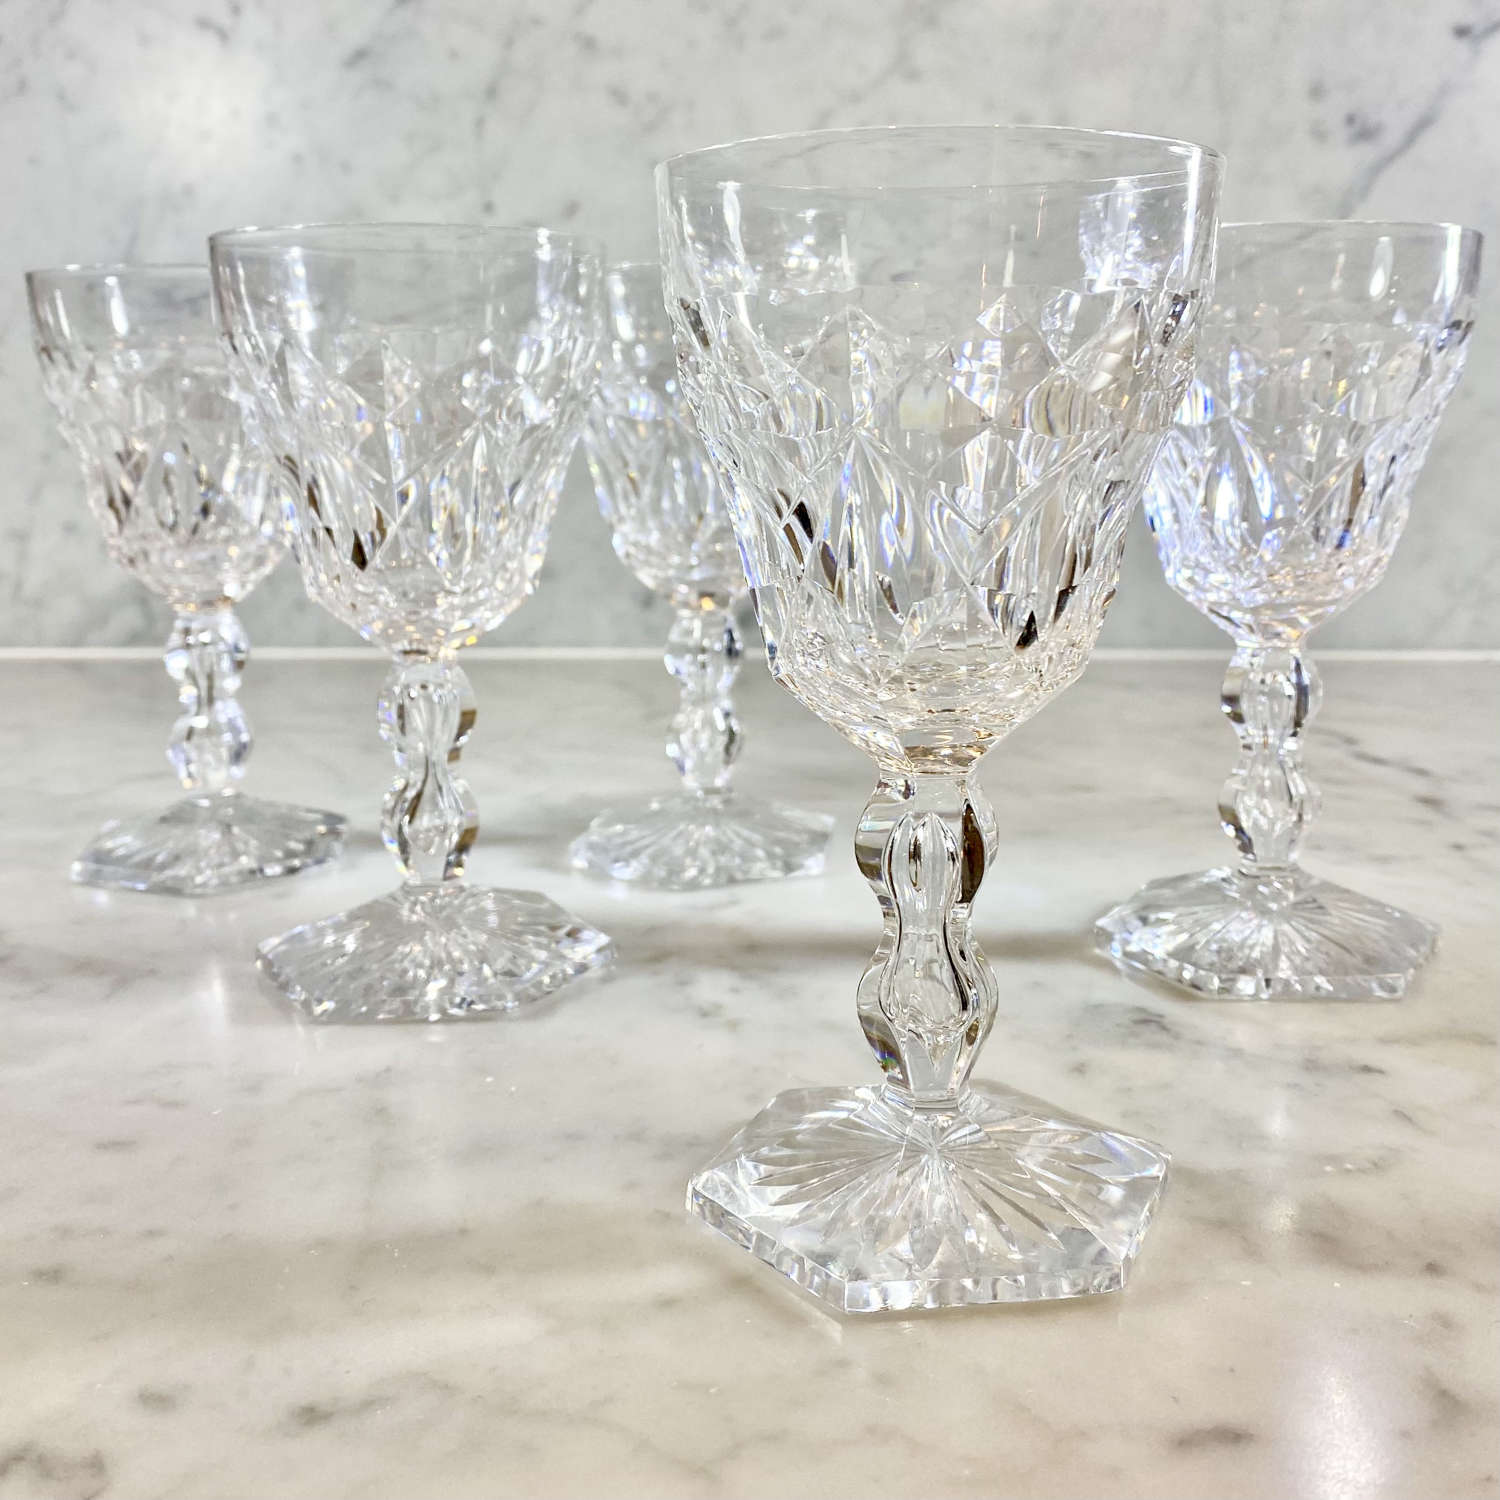 Five Val Saint Lambert finest crystal wine glasses